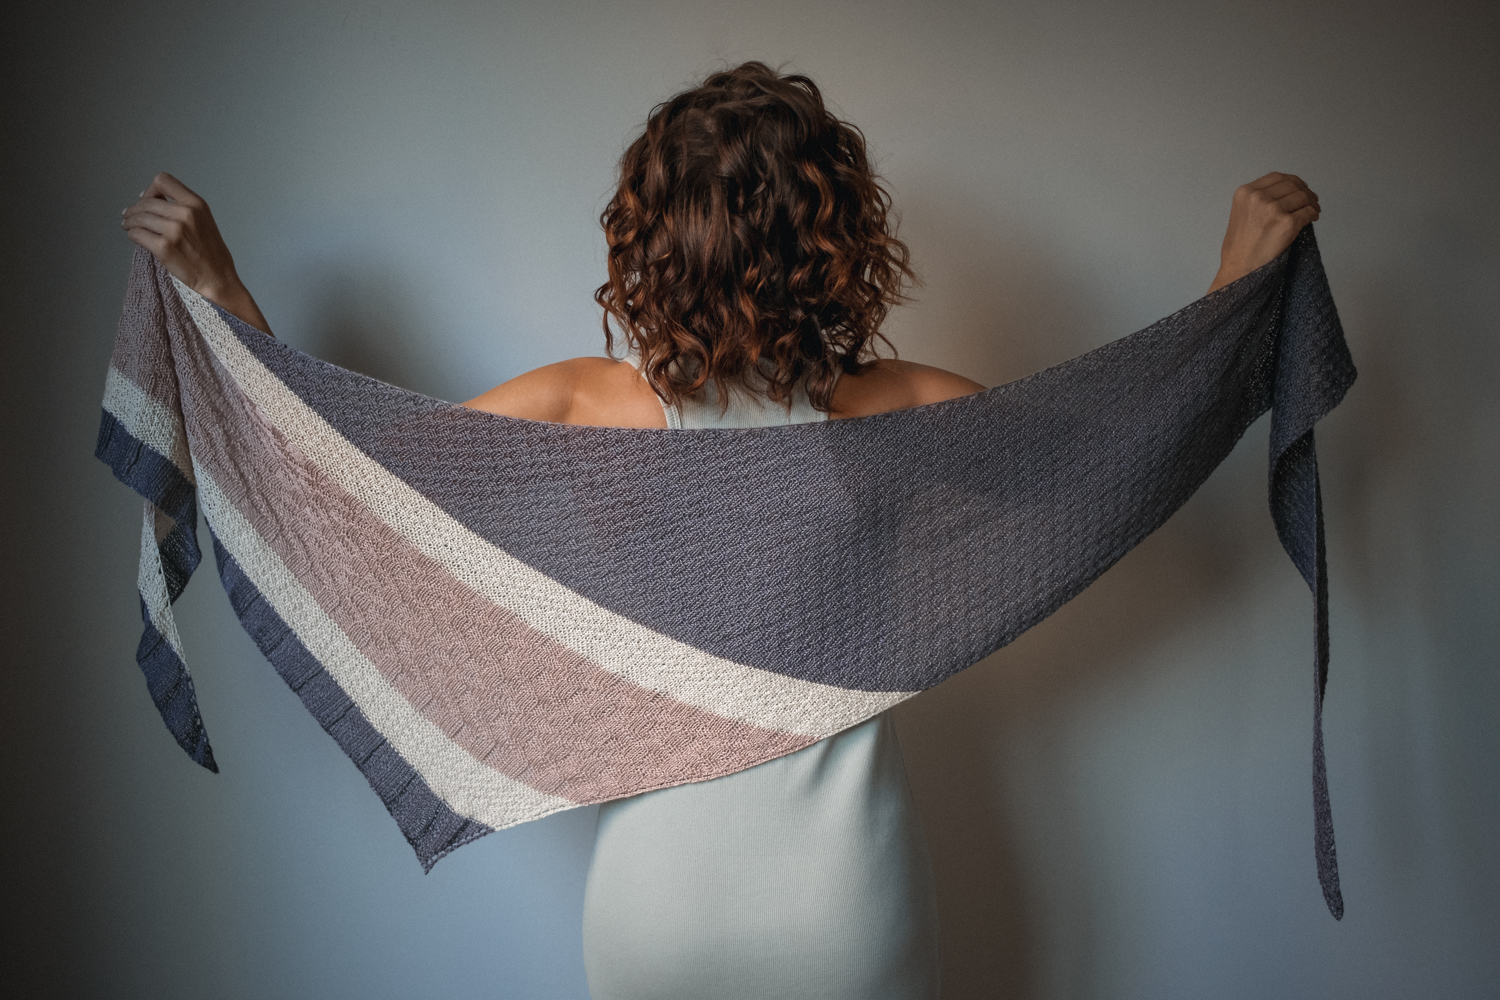 beginner triangle knit shawl pattern